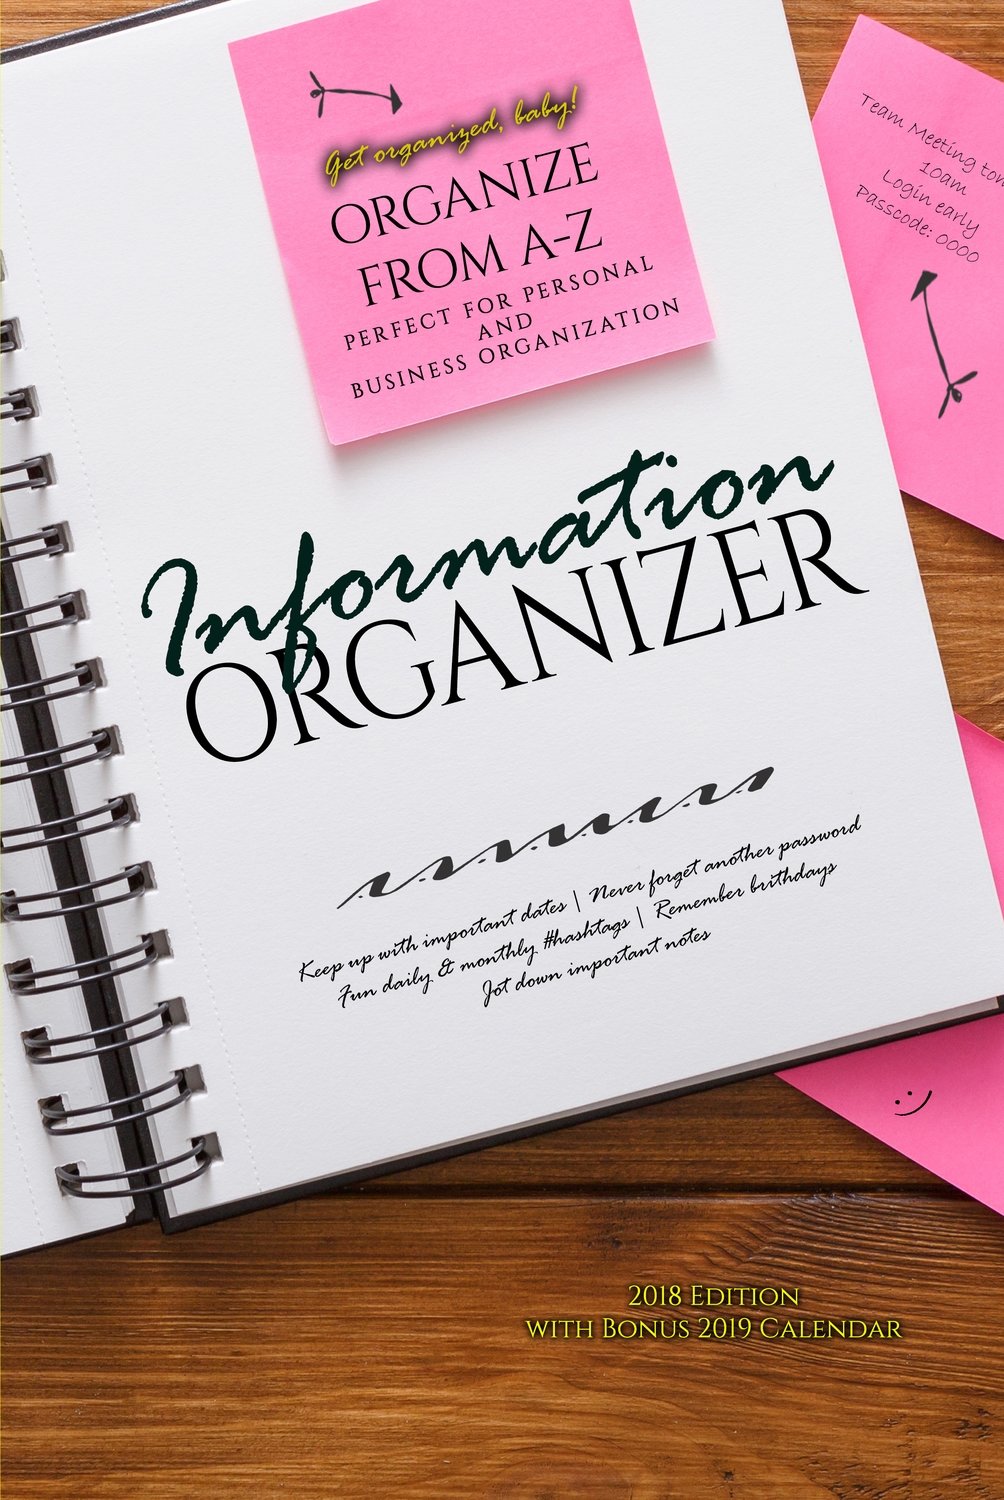 Information Organizer - Organize from A-Z